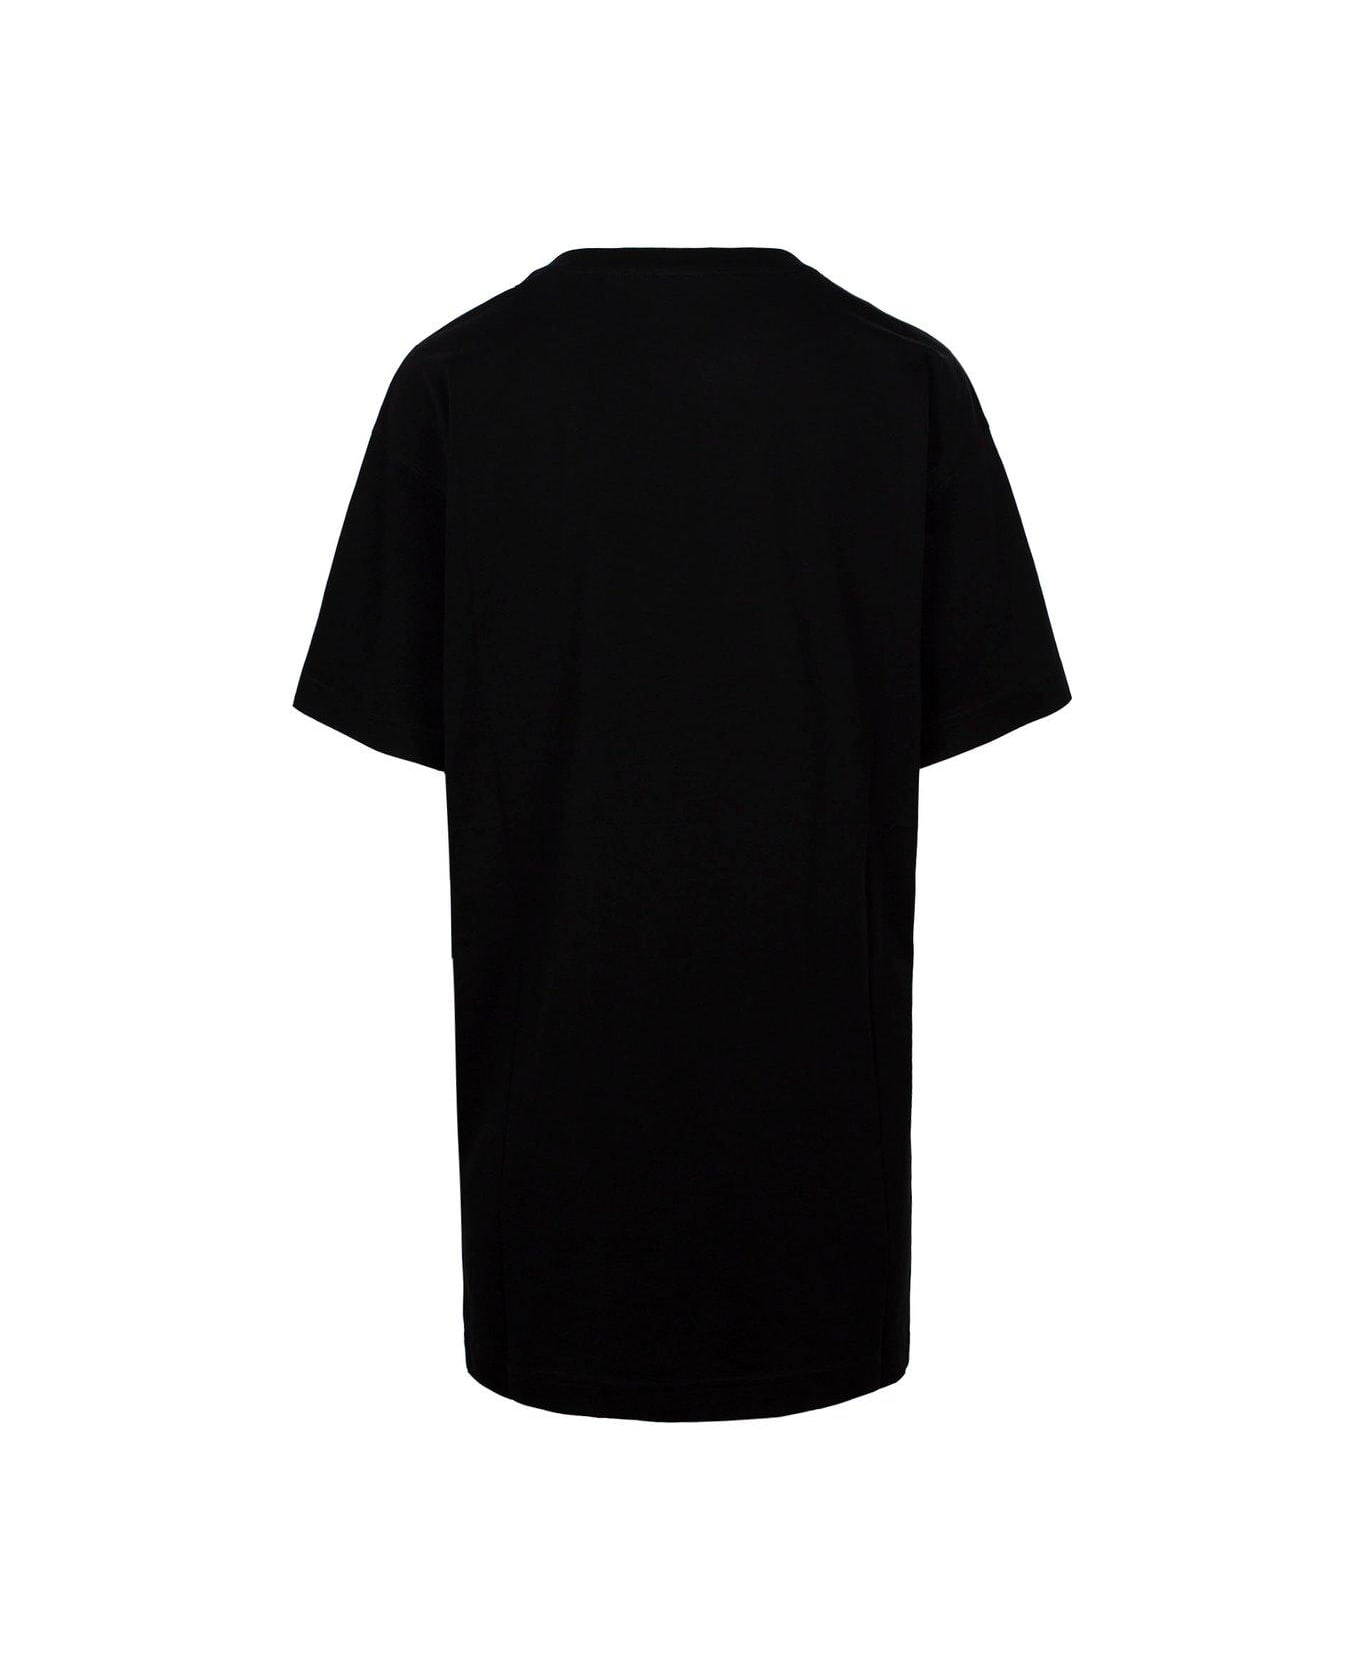 Moschino Teddy Bear Printed T-shirt Dress - Fantasia nero Tシャツ